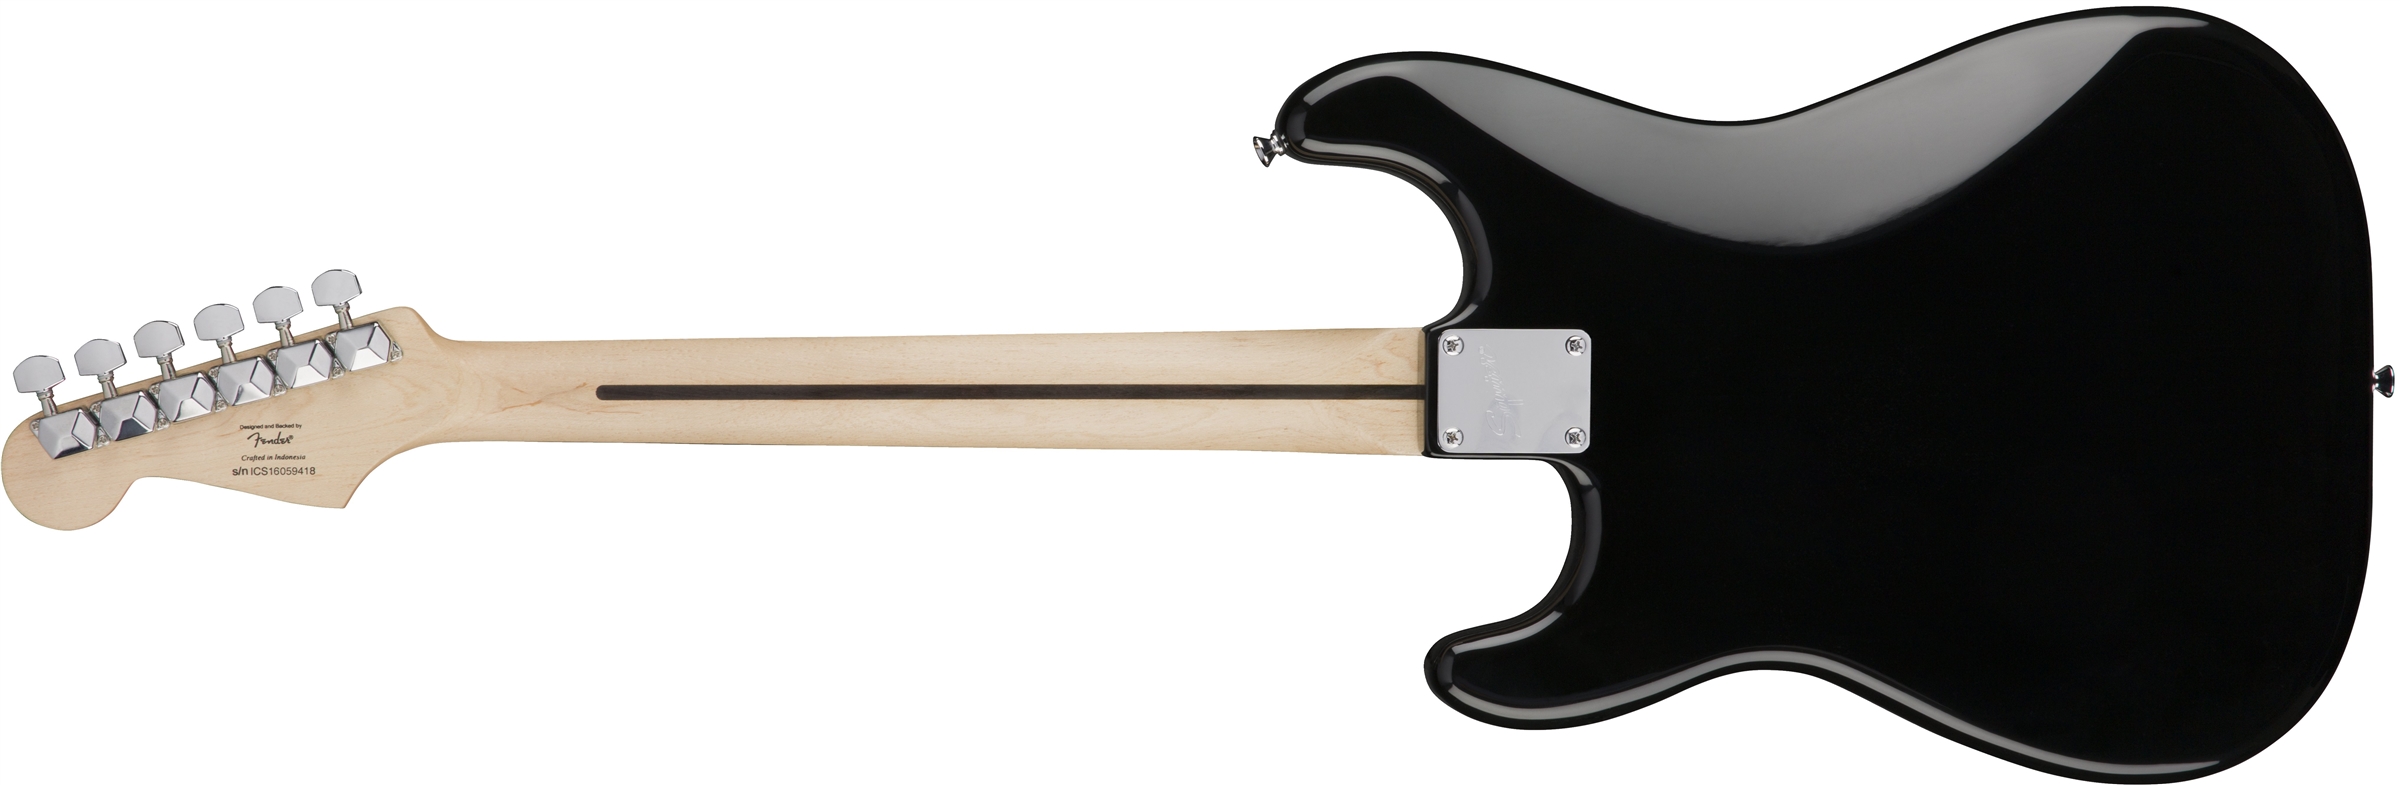 Squier Strat Bullet Ht Hss Rw - Black - Str shape electric guitar - Variation 1